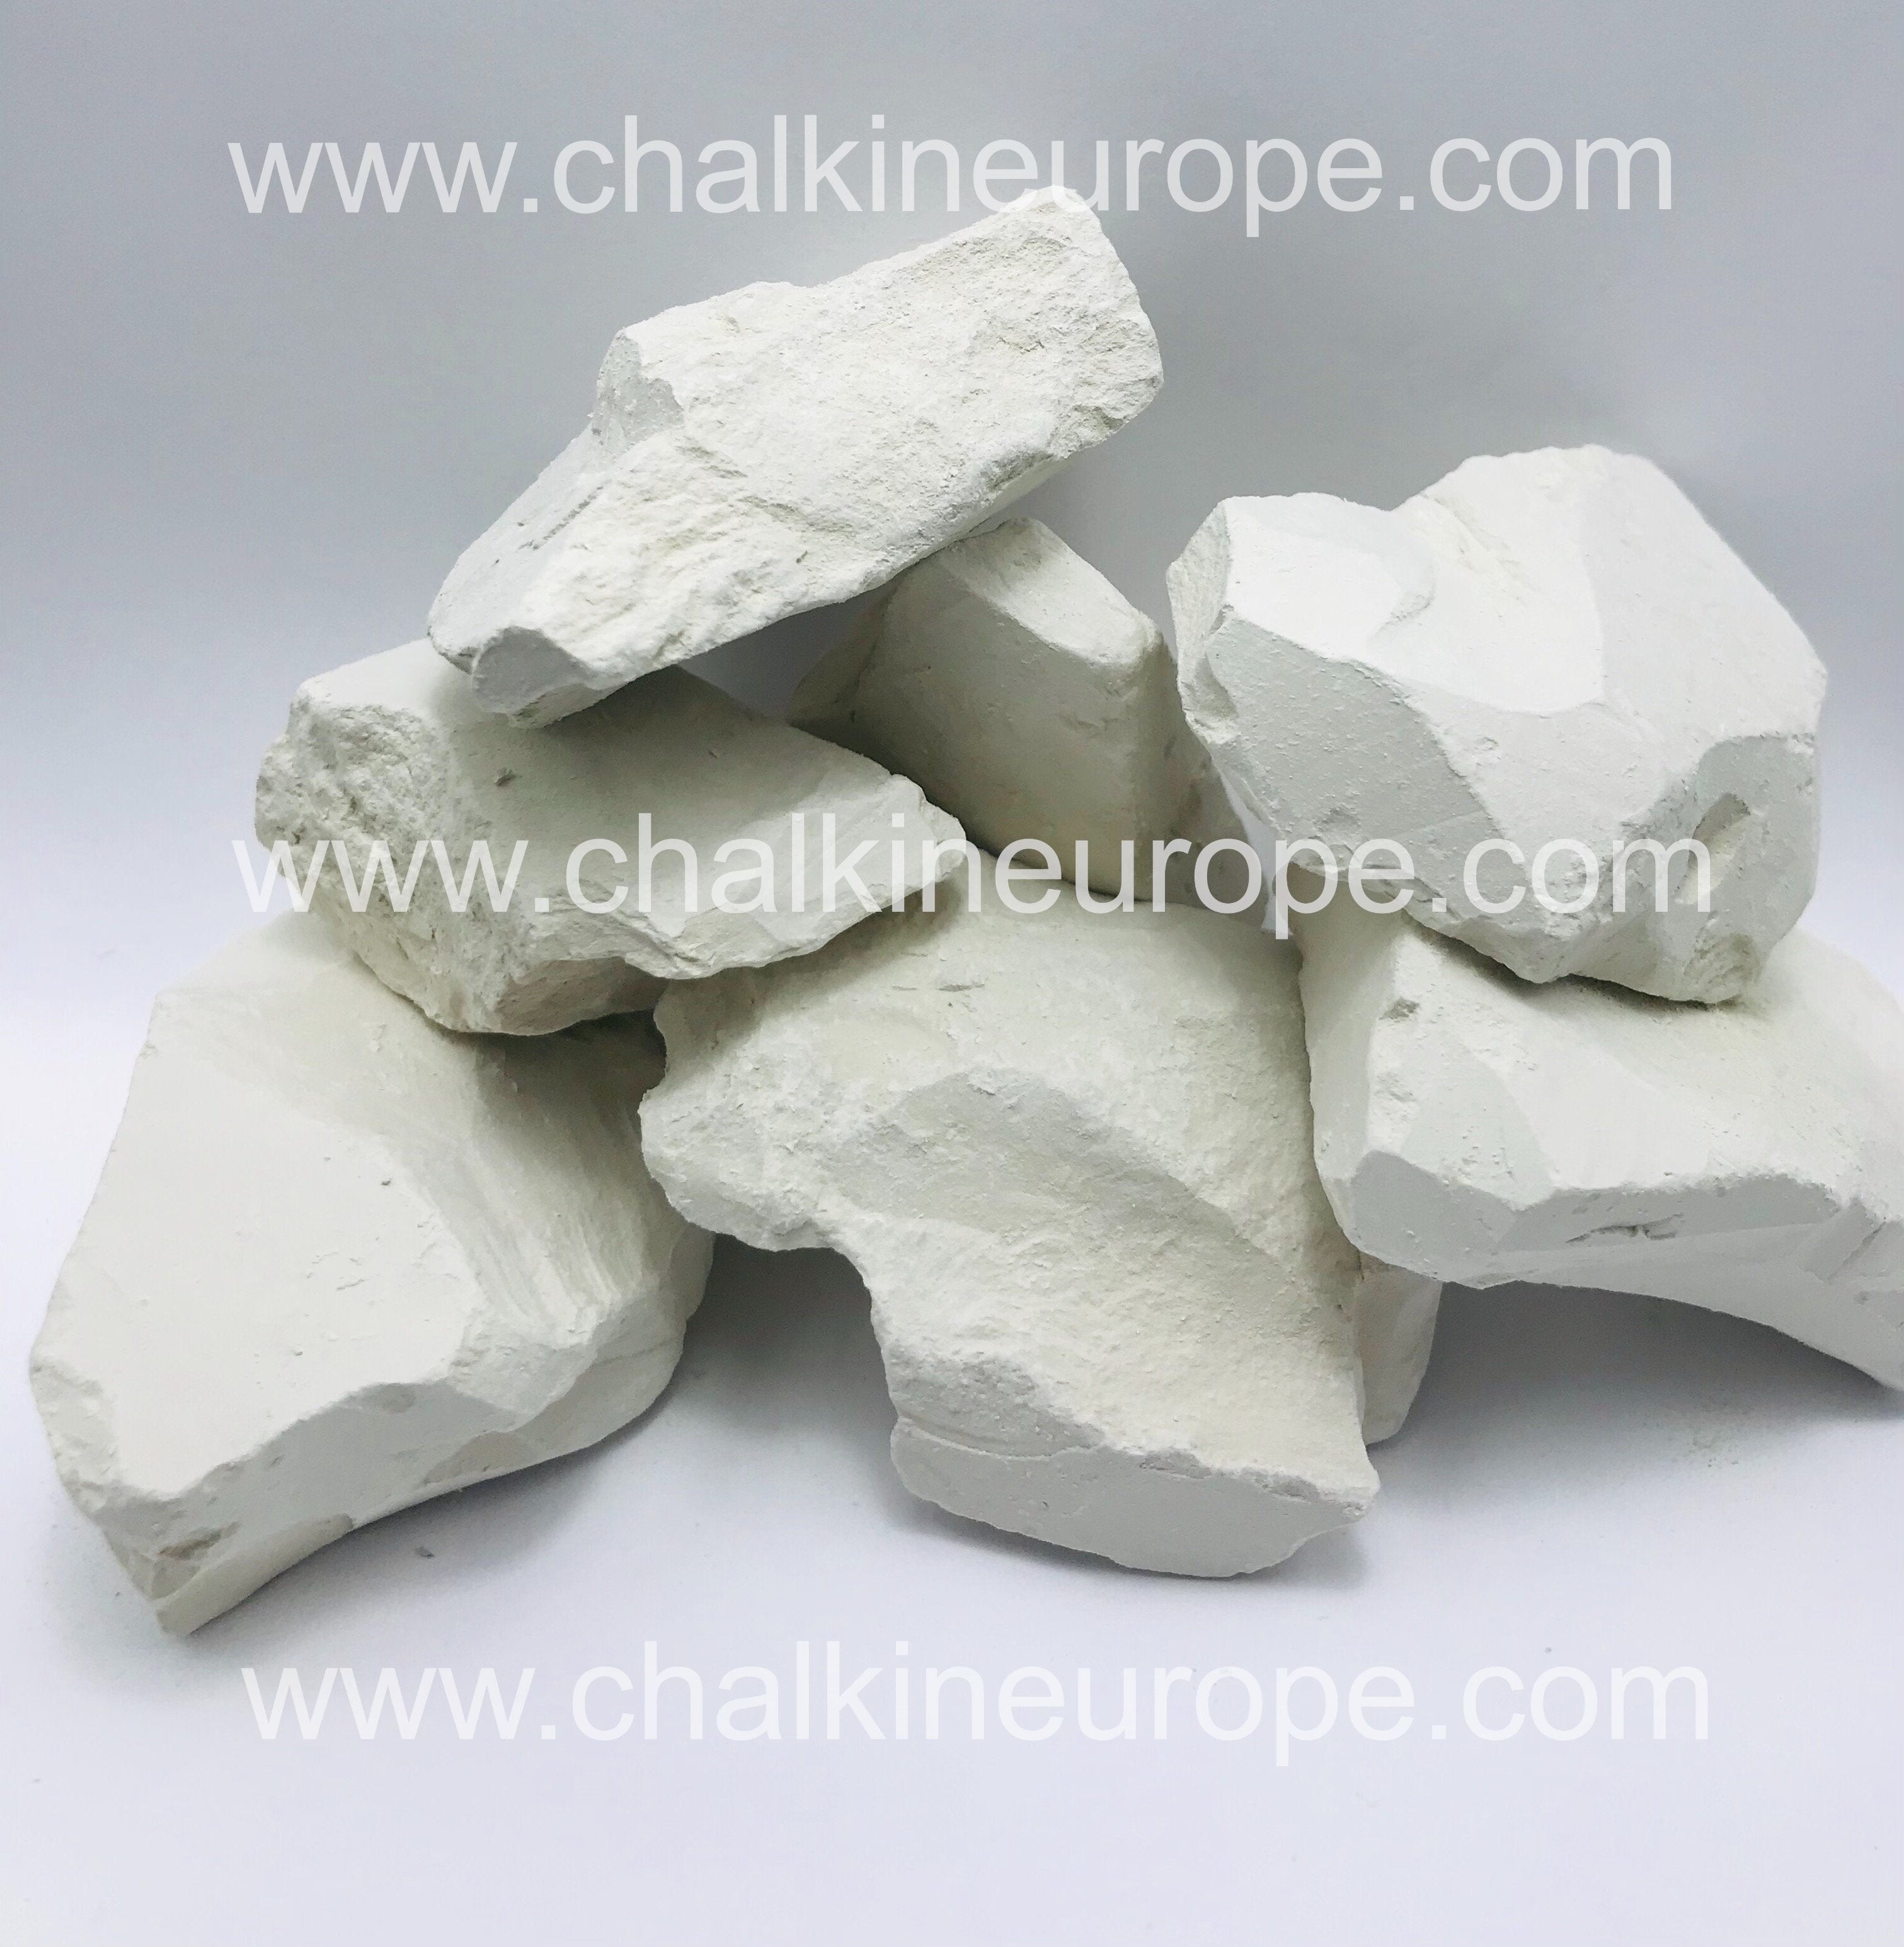 Edible White Clay - Chalkineurope